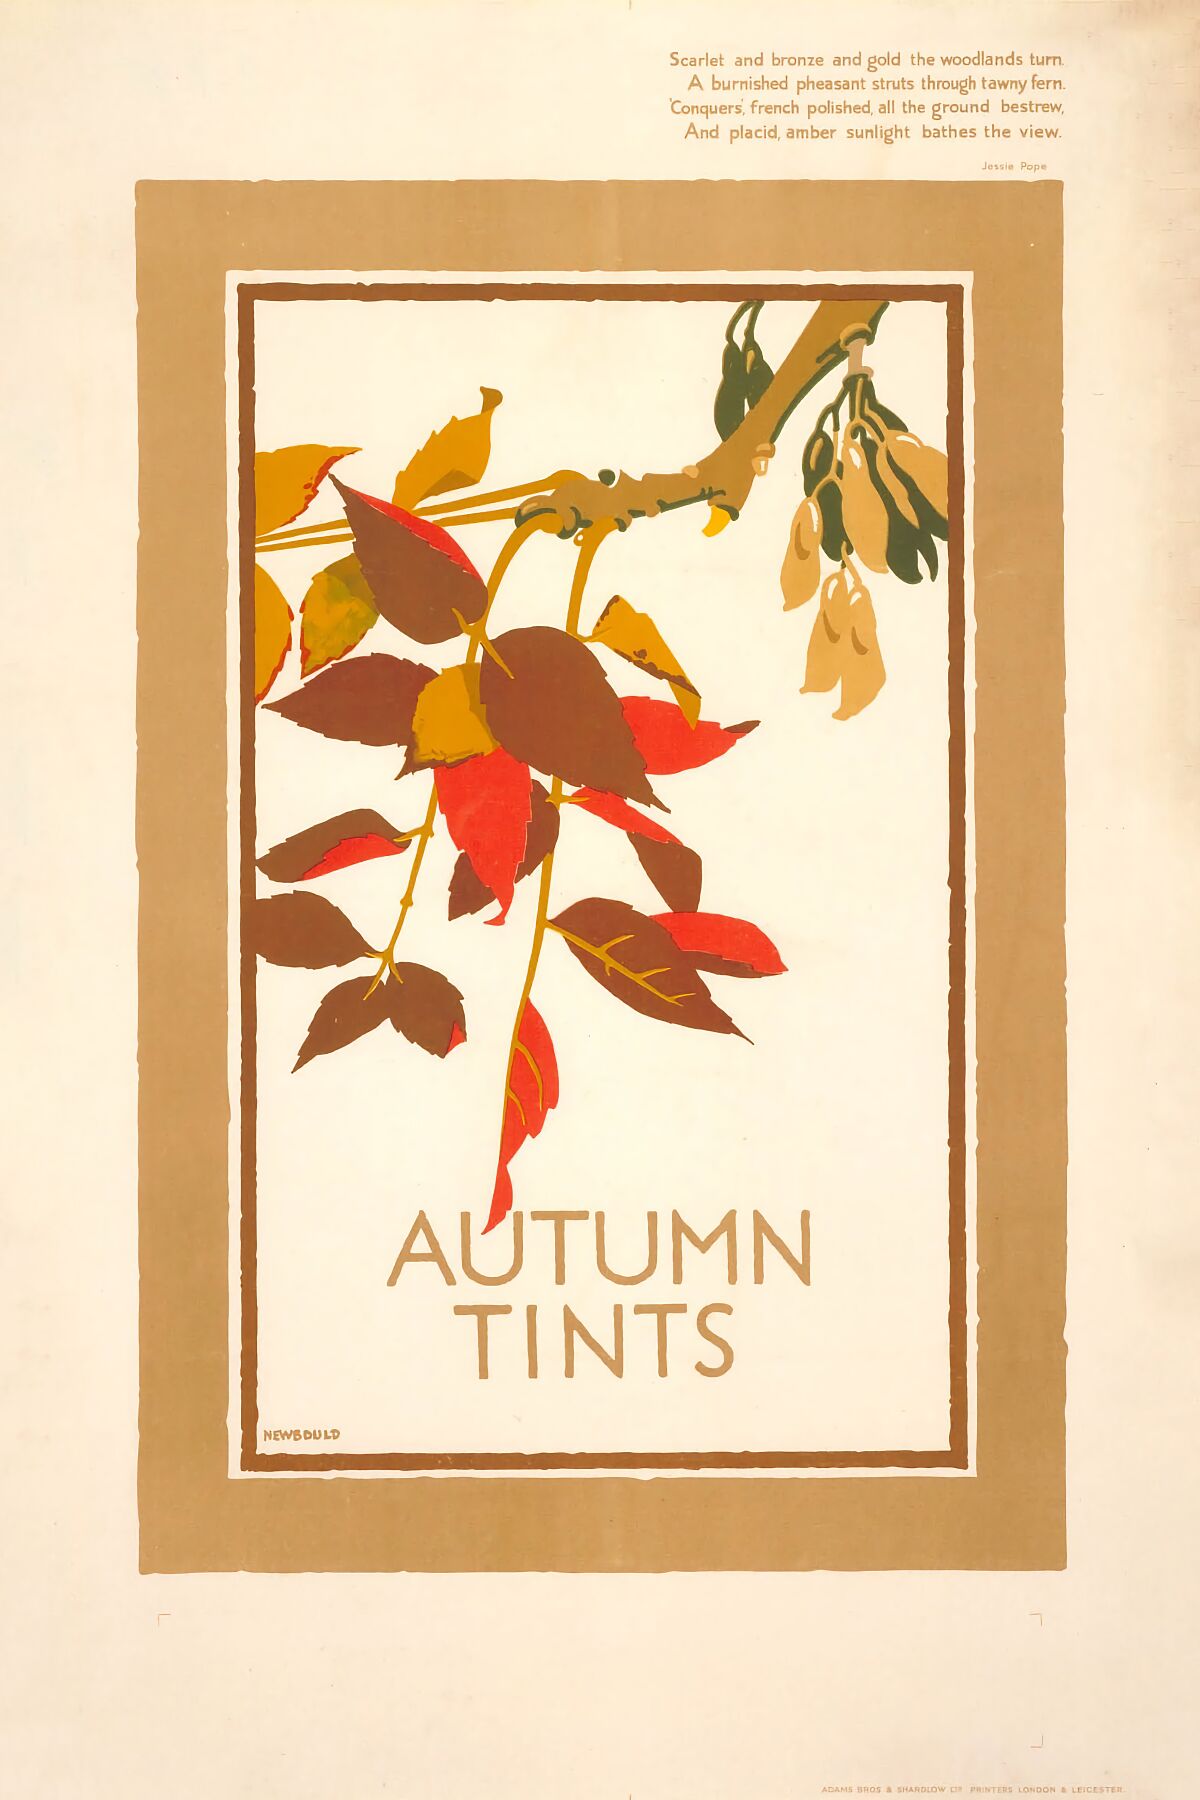 Autumn Tints by Frank Newbould - 1922